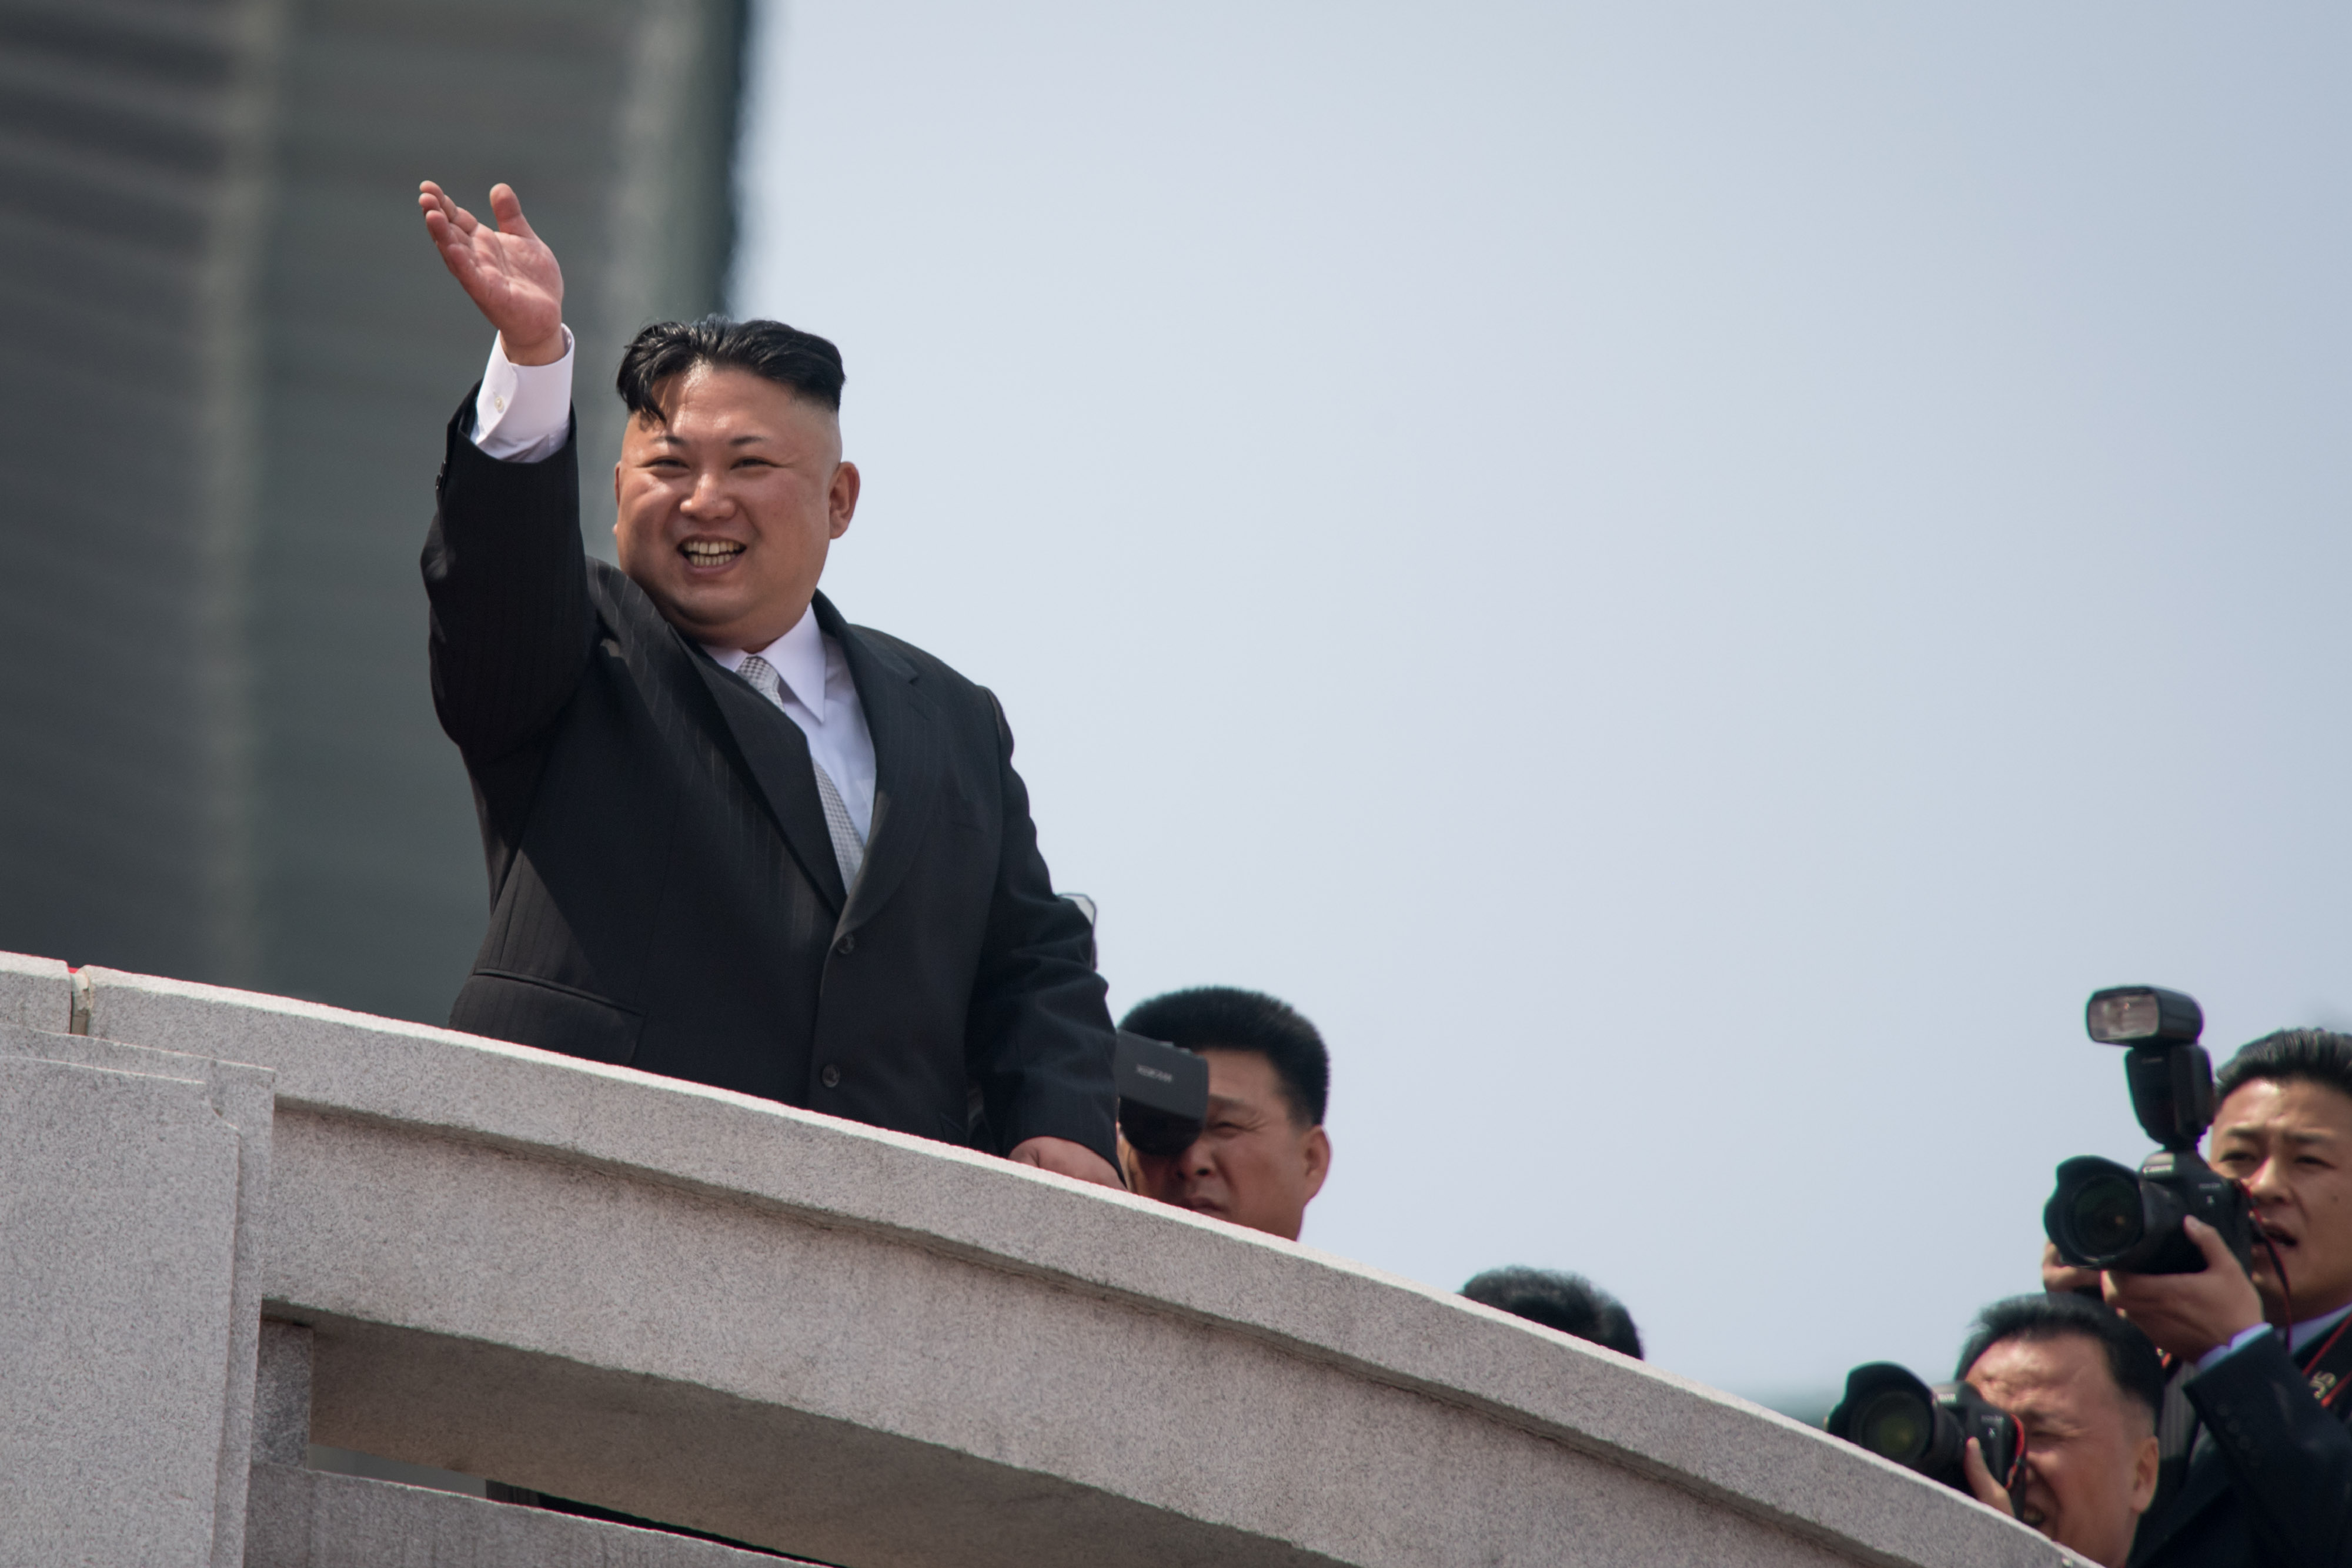 Kim Jong Un waves during a military parade